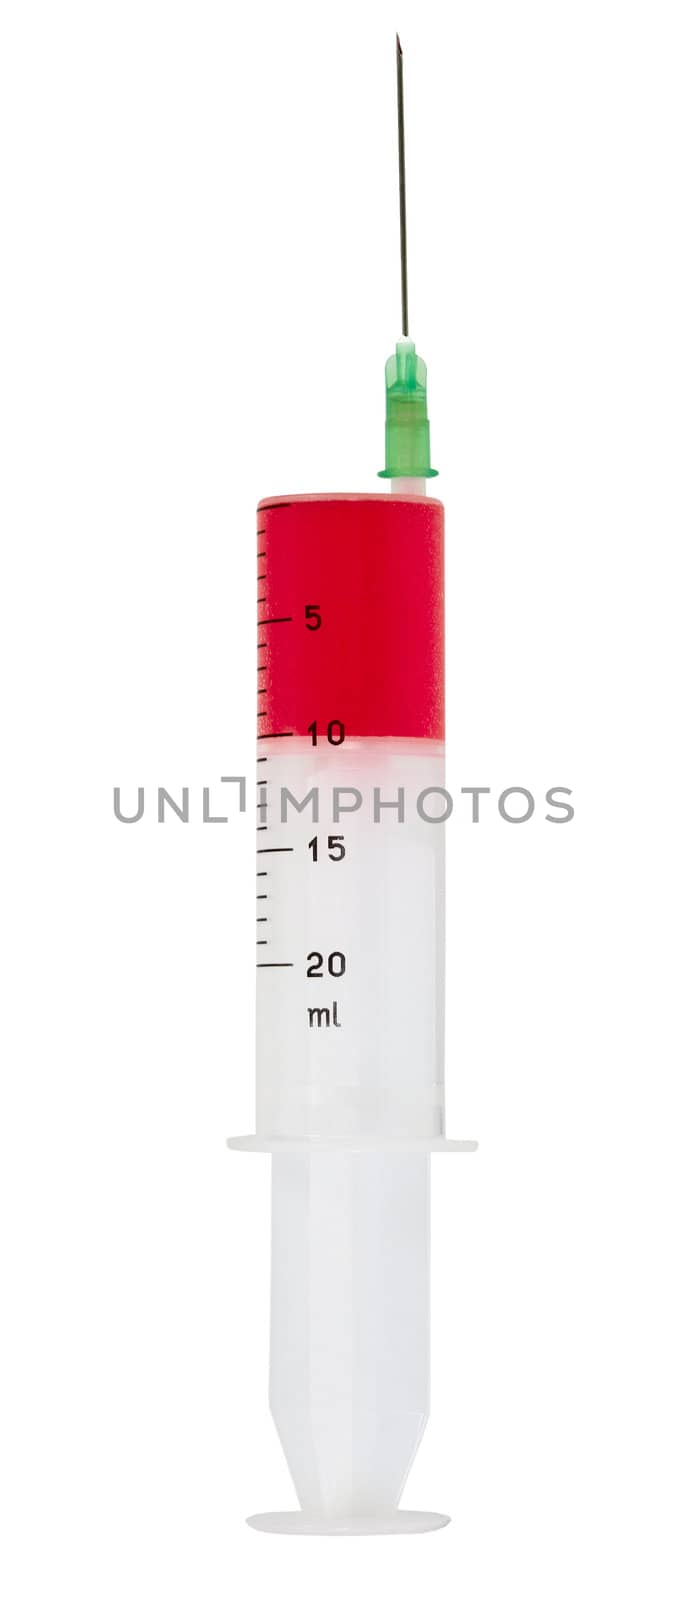 Large syringe with blood isolated on a white background